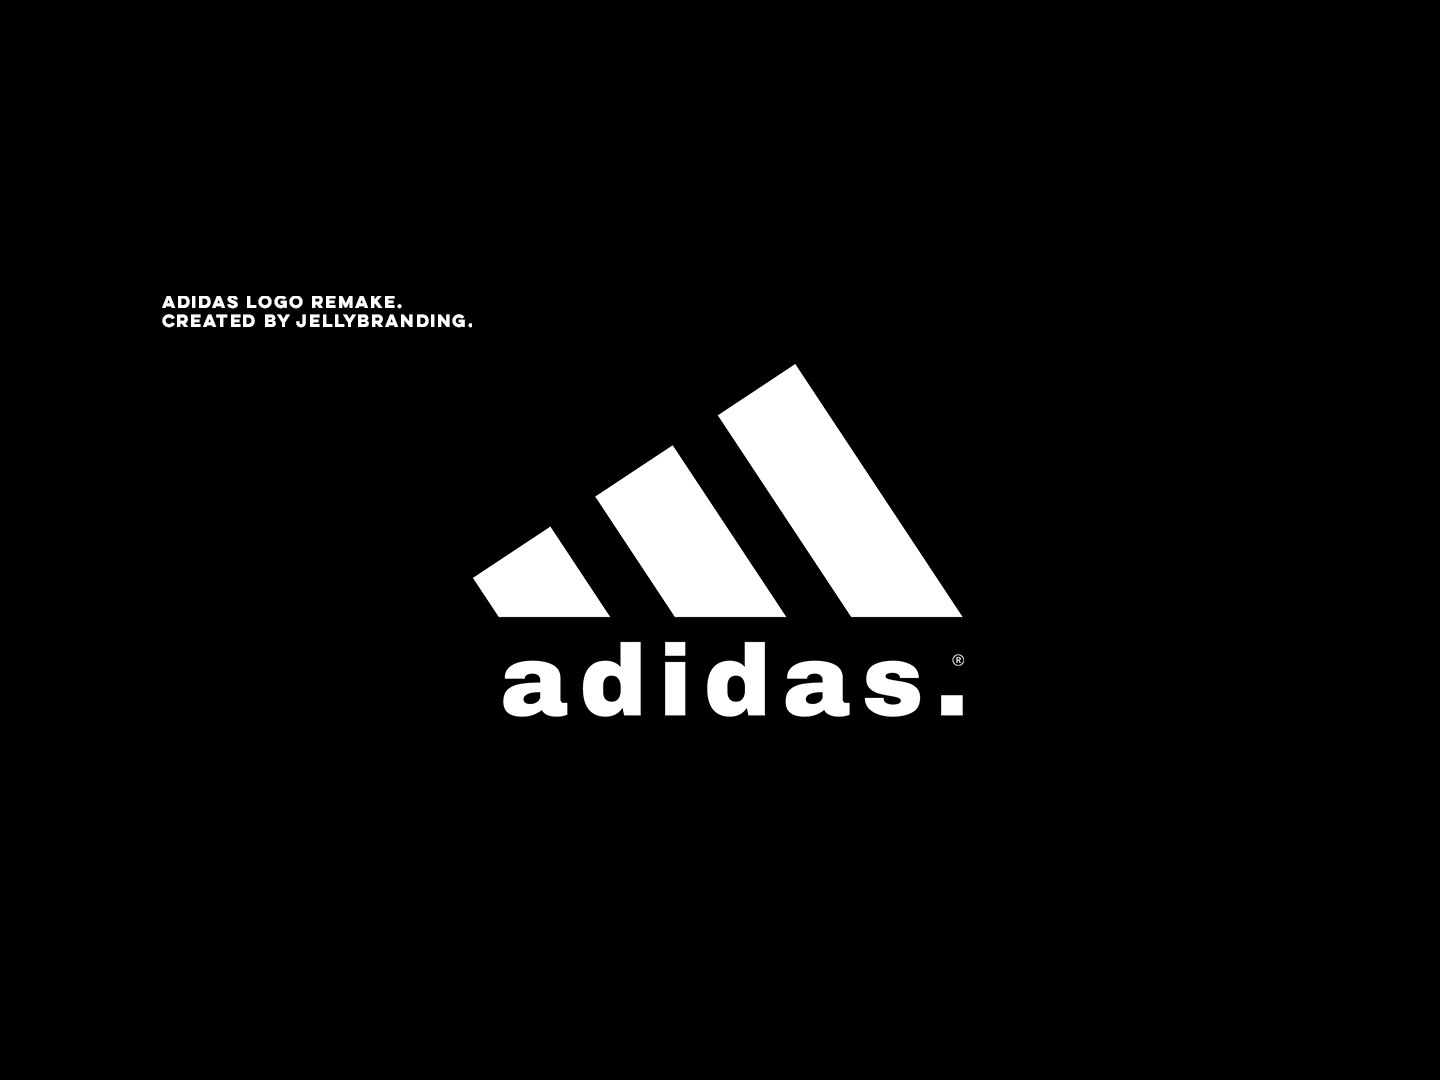 Adidas Logo Remake. by Abdullah Aftan on Dribbble